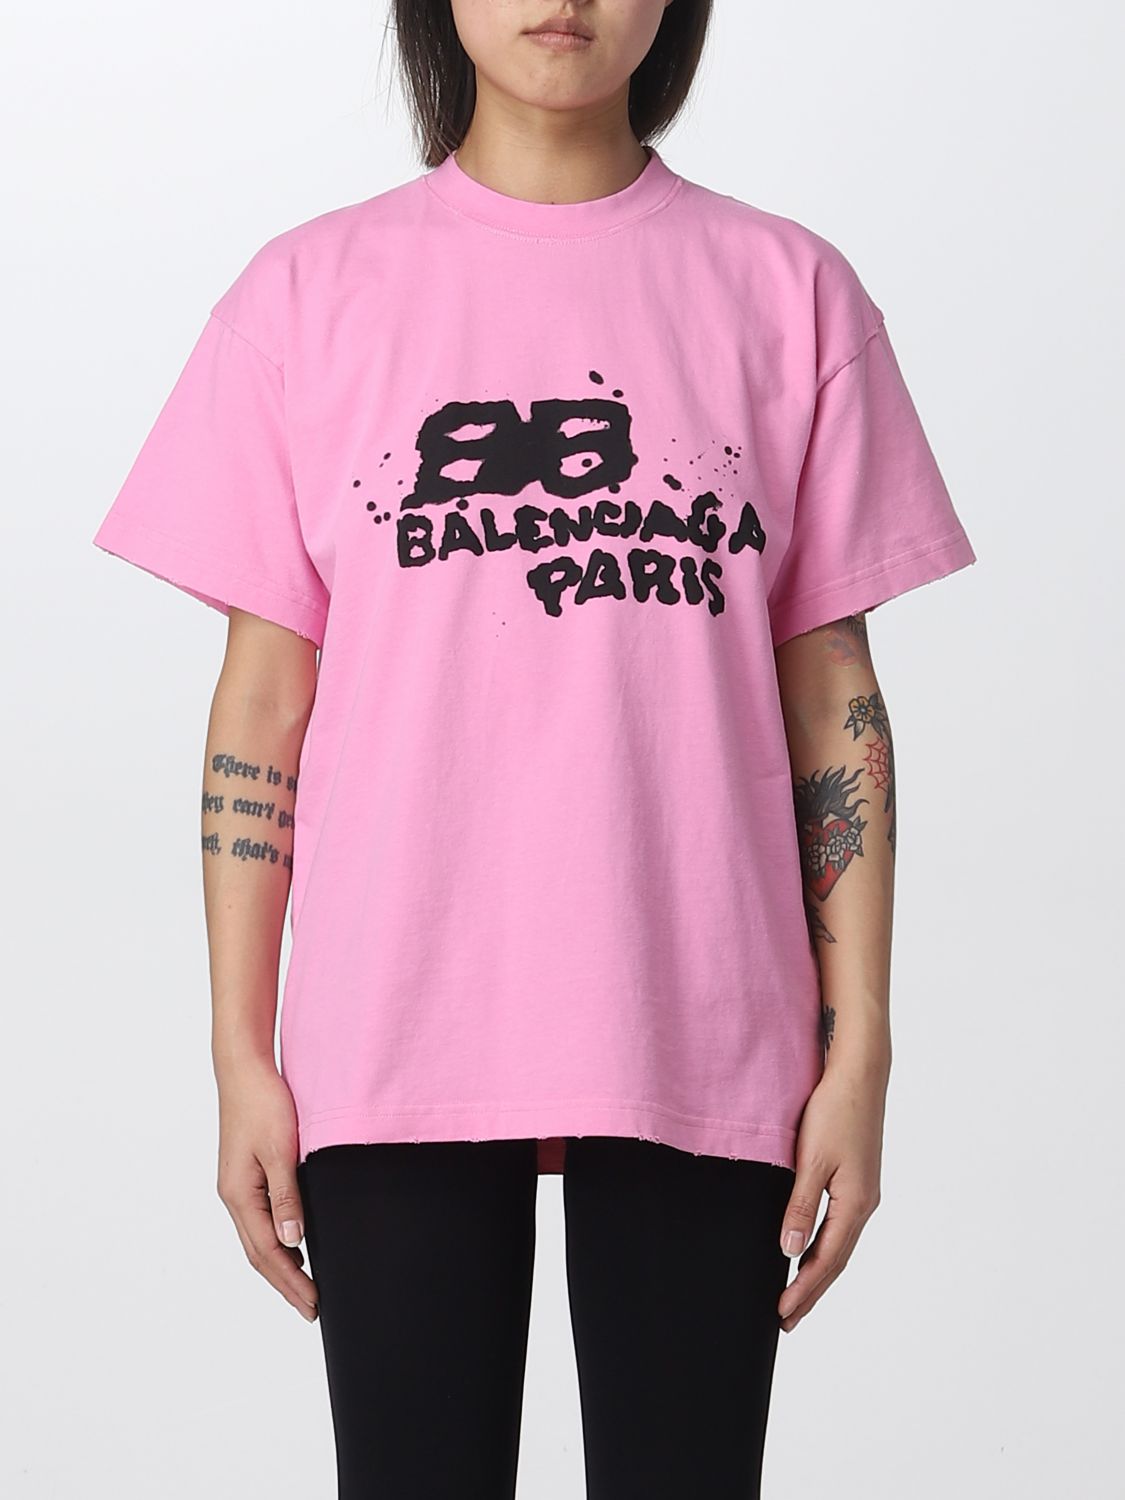 BALENCIAGA: contrasting graffiti logo - Pink | t- shirt 612965TNVN4 online at GIGLIO.COM